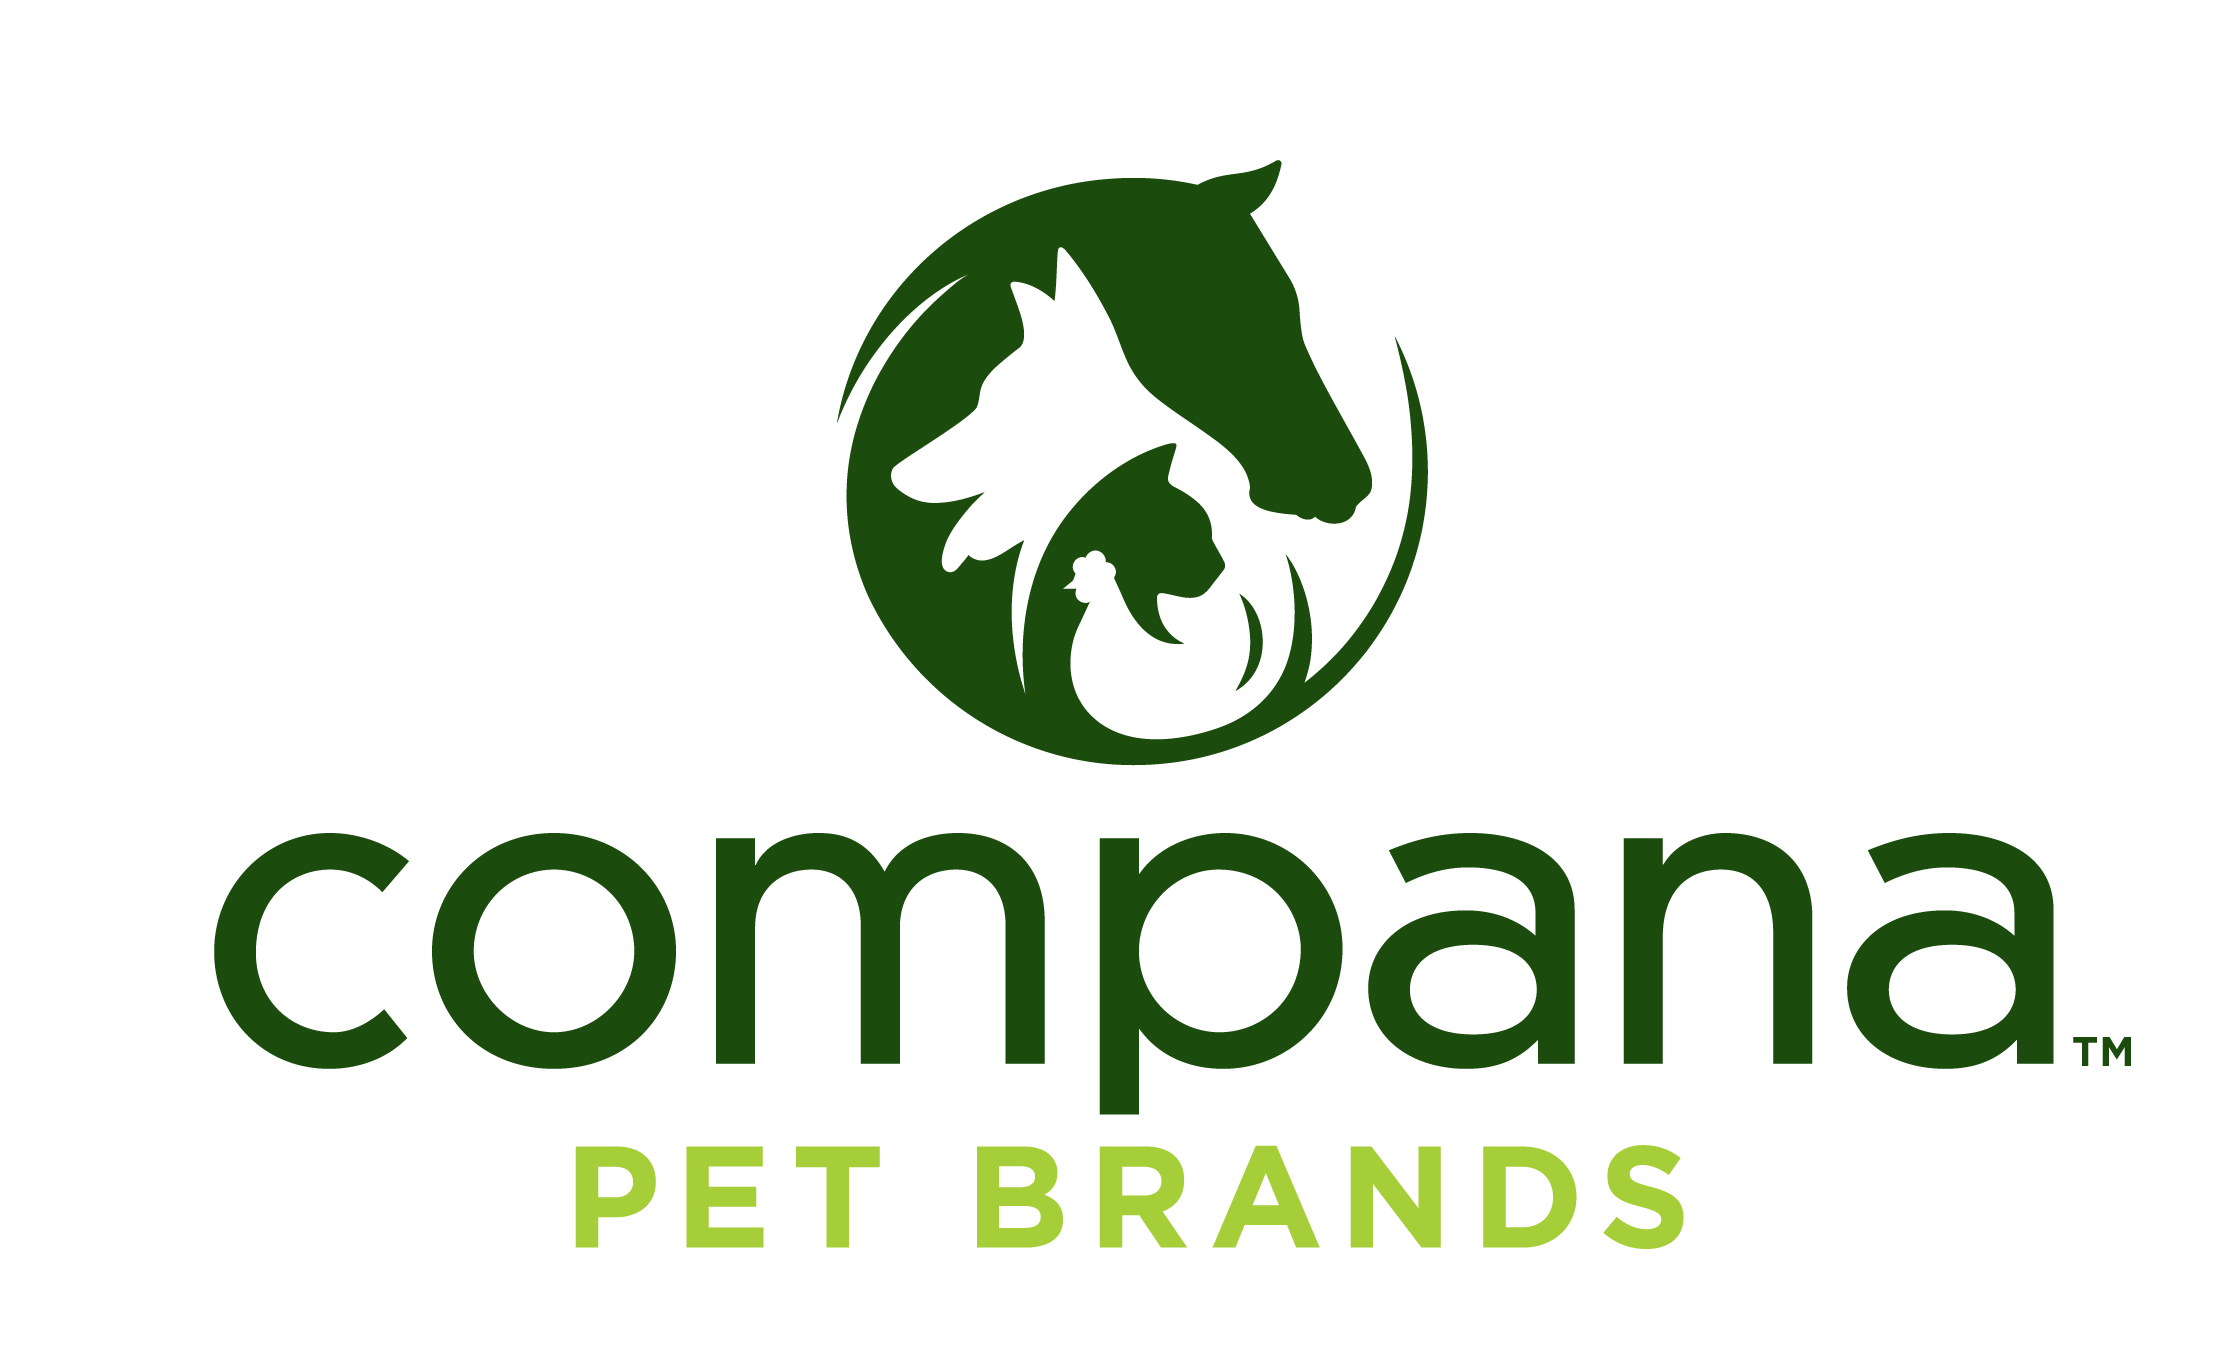 Compana Pet Brands